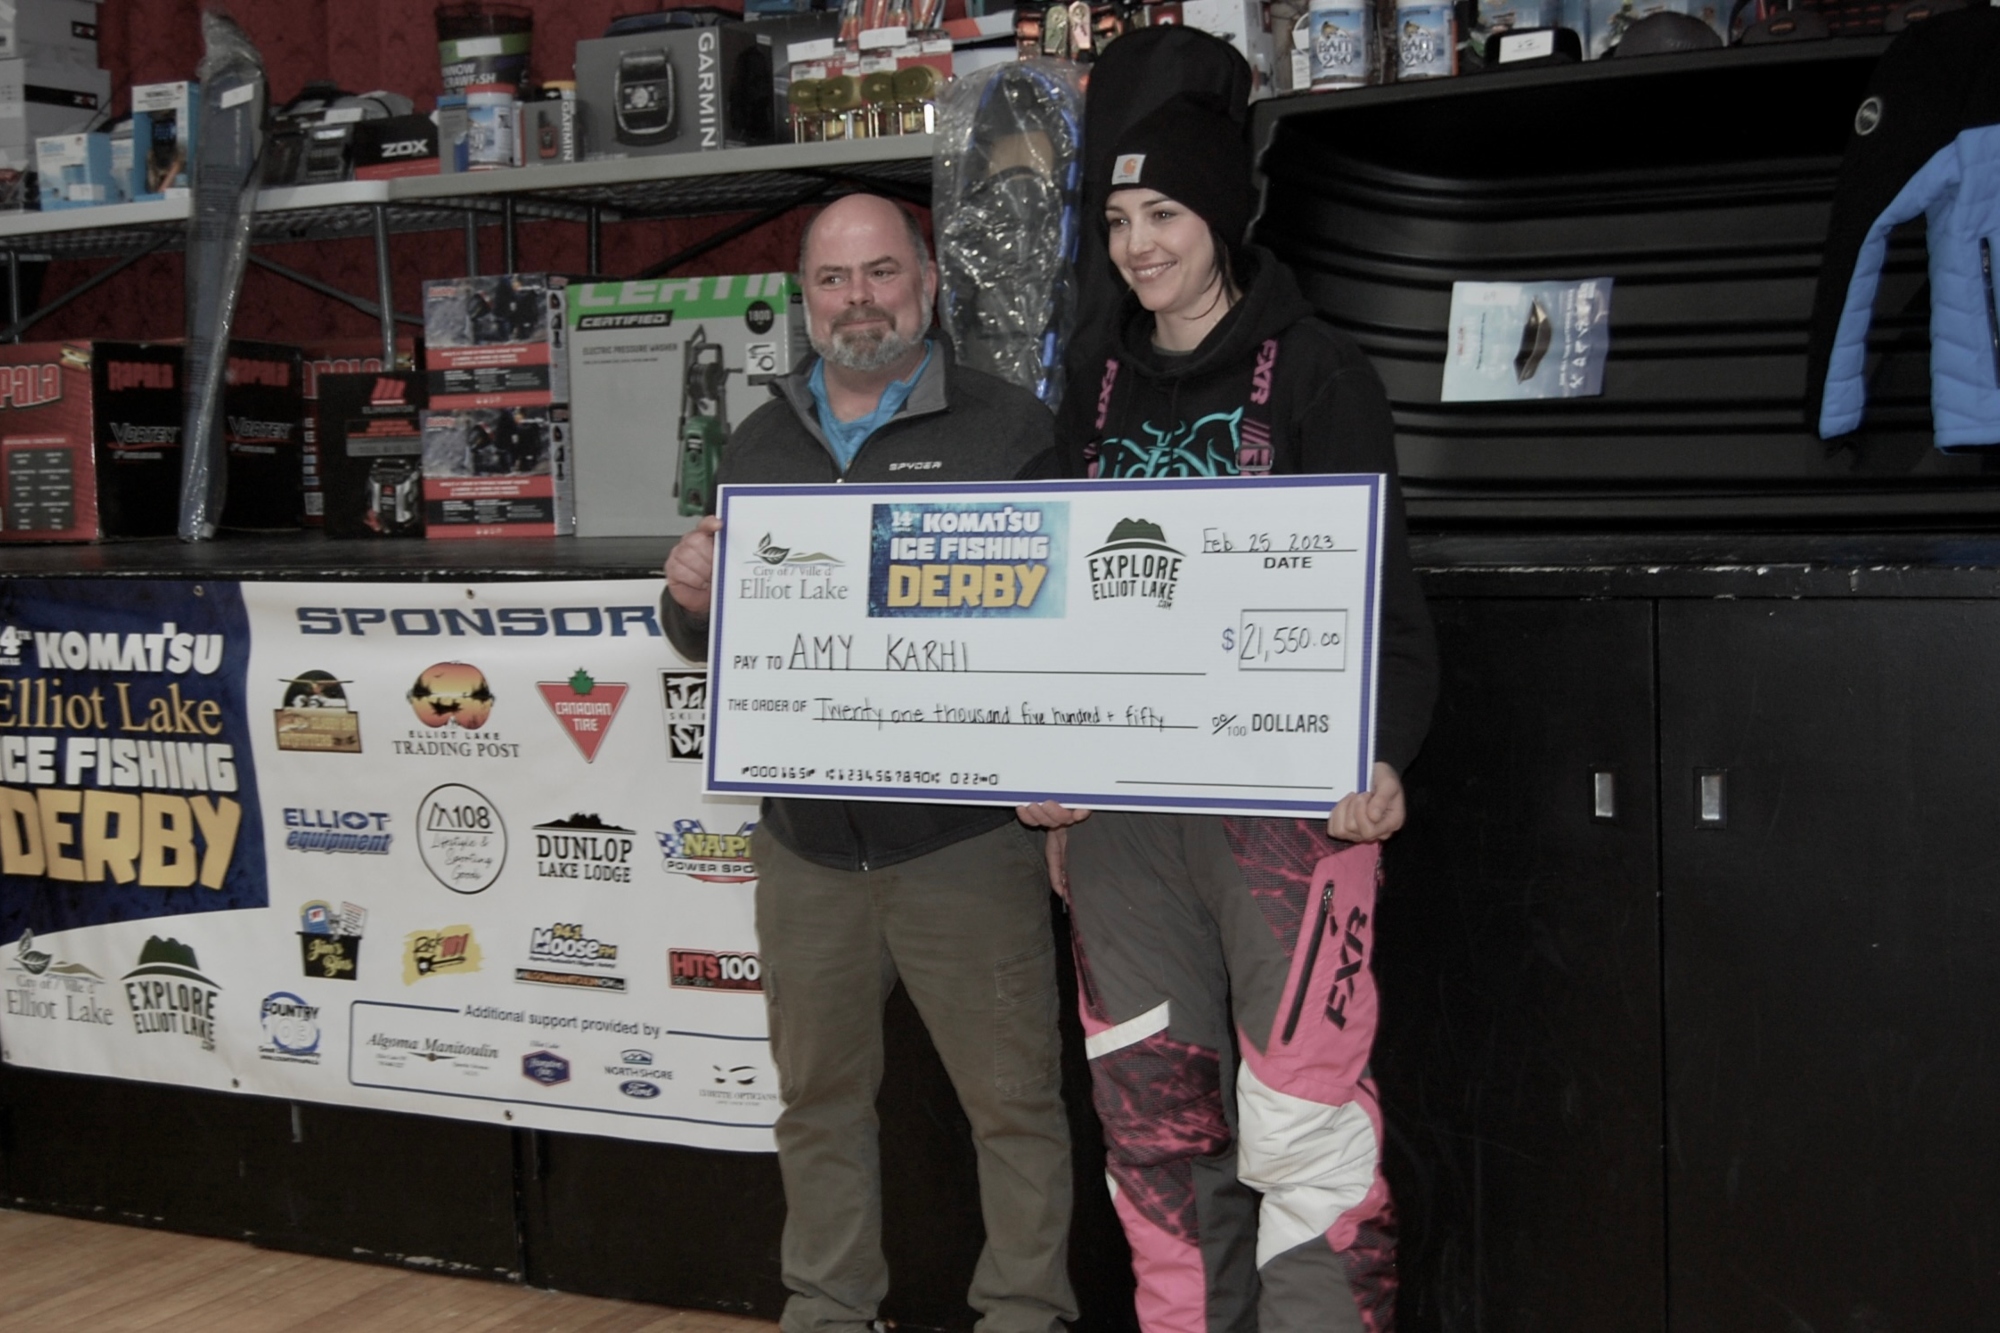 Ice Fishing Derby grand prize winner reels in over $21K - Elliot Lake News